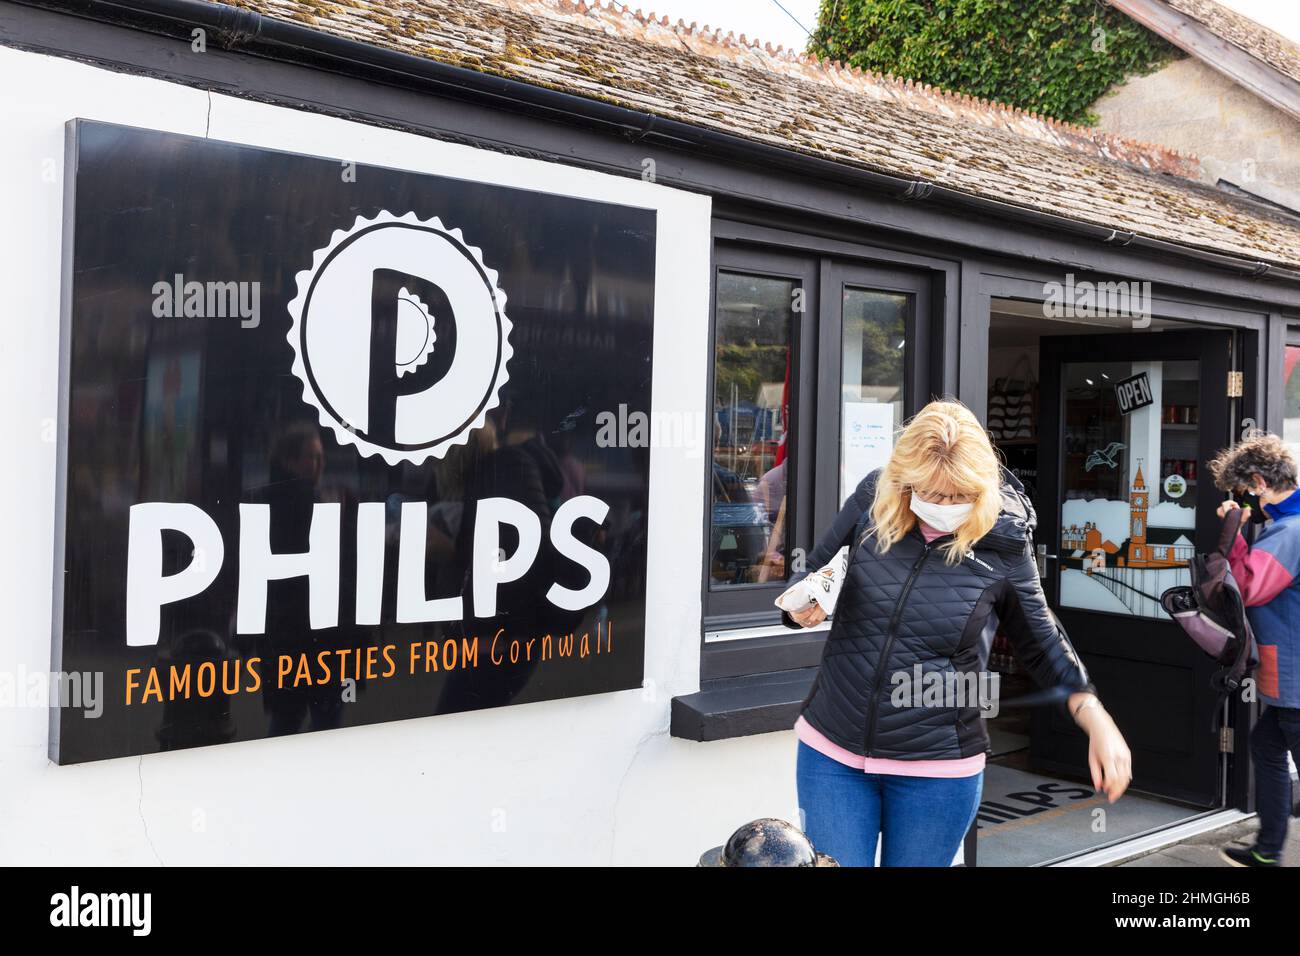 Philps Cornish pasty shop en Porthleven, Cornwall, Reino Unido, Philps Pasties - Panaderos tradicionales de pasta de Cornish, pasties de Cornish, panaderos, Philps, Cornish, comida, Foto de stock